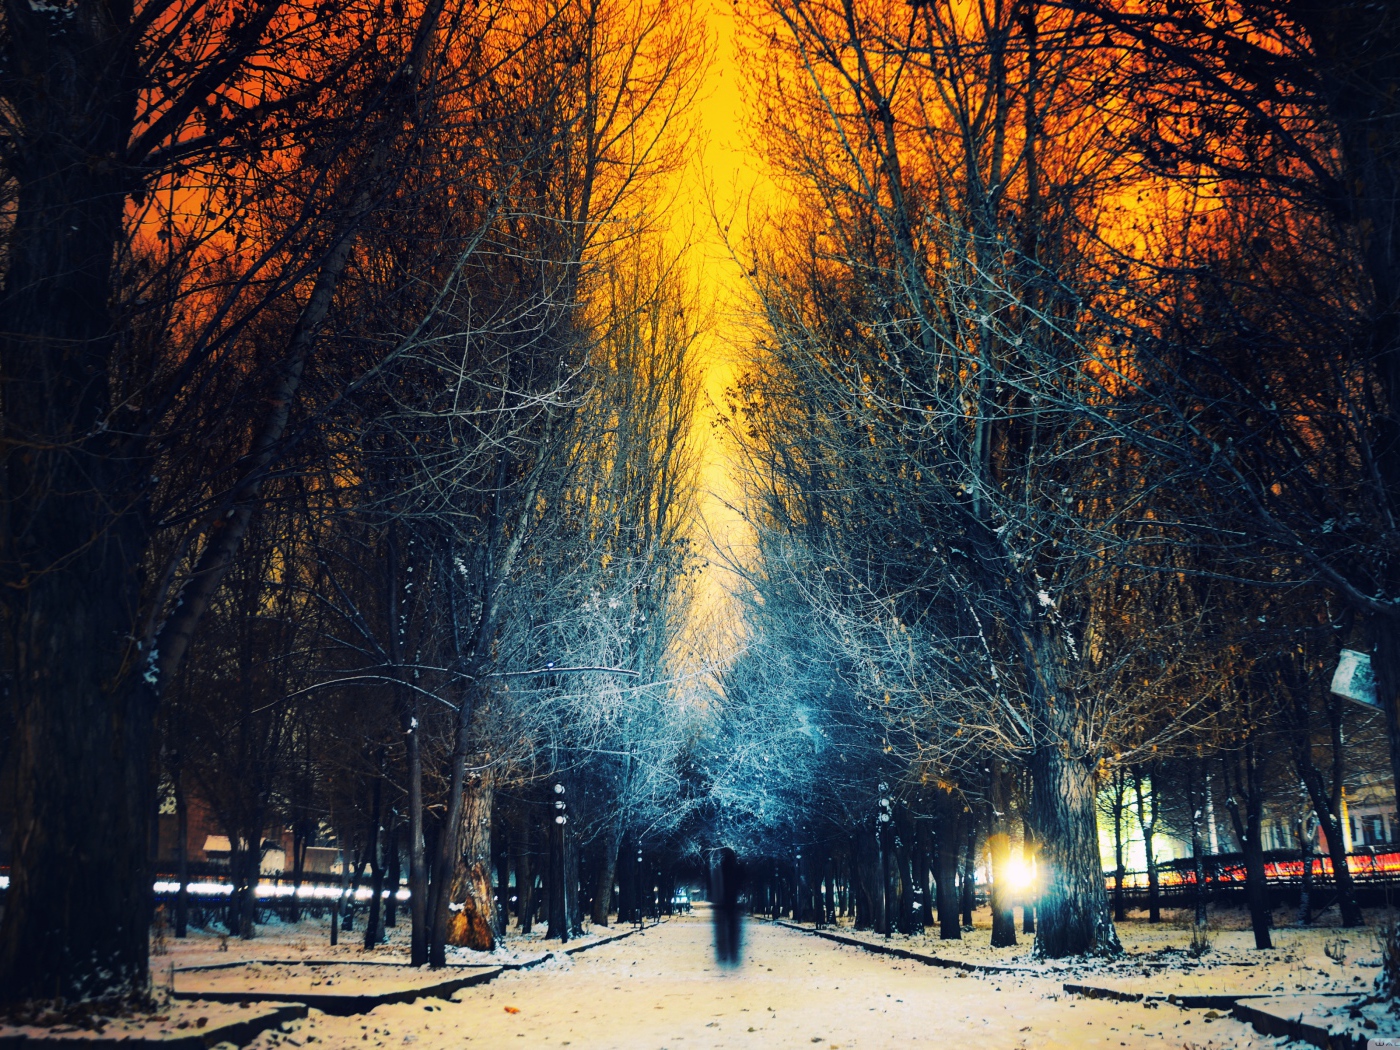 Twilight in the winter